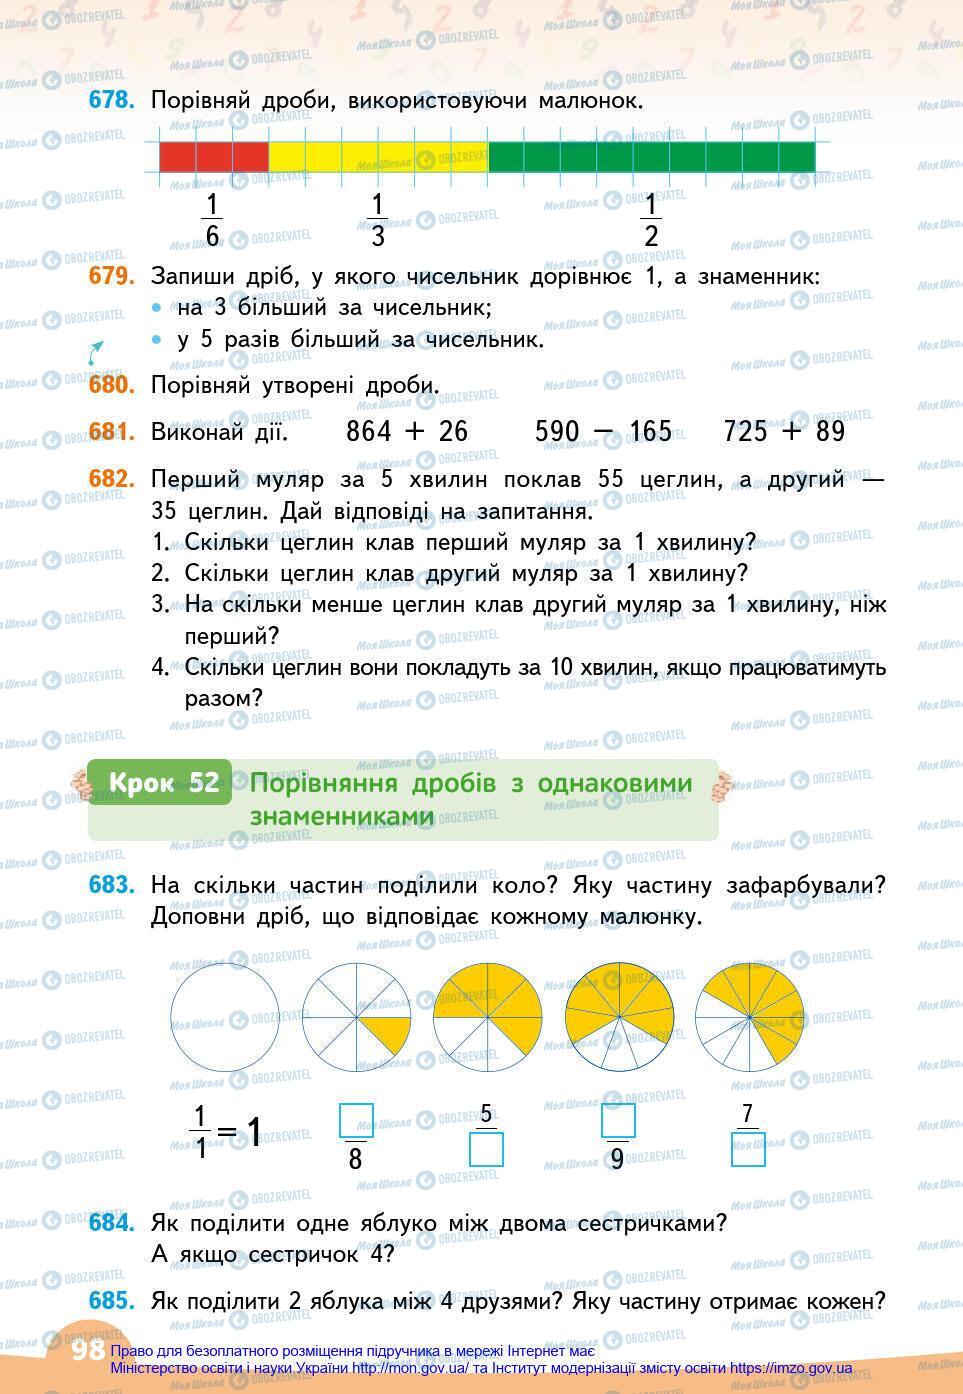 Учебники Математика 3 класс страница 98